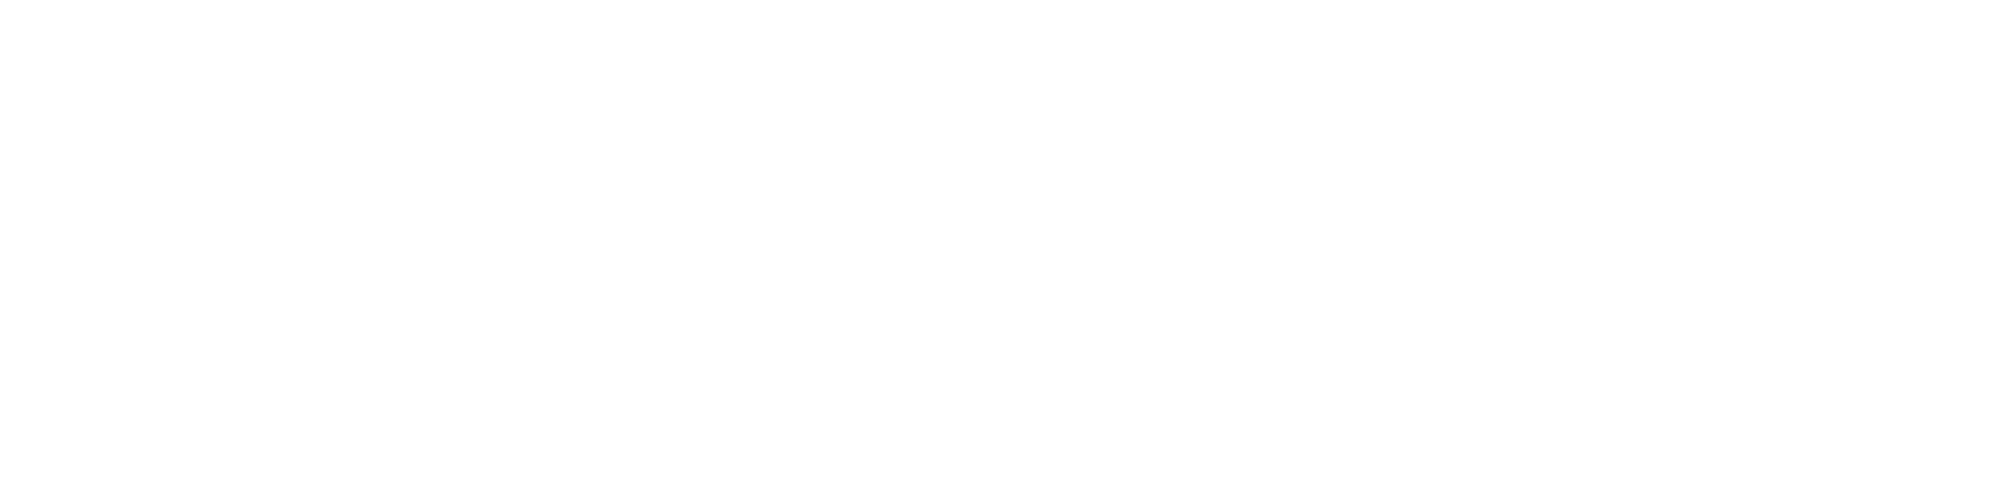 ikaria lean belly juice tested